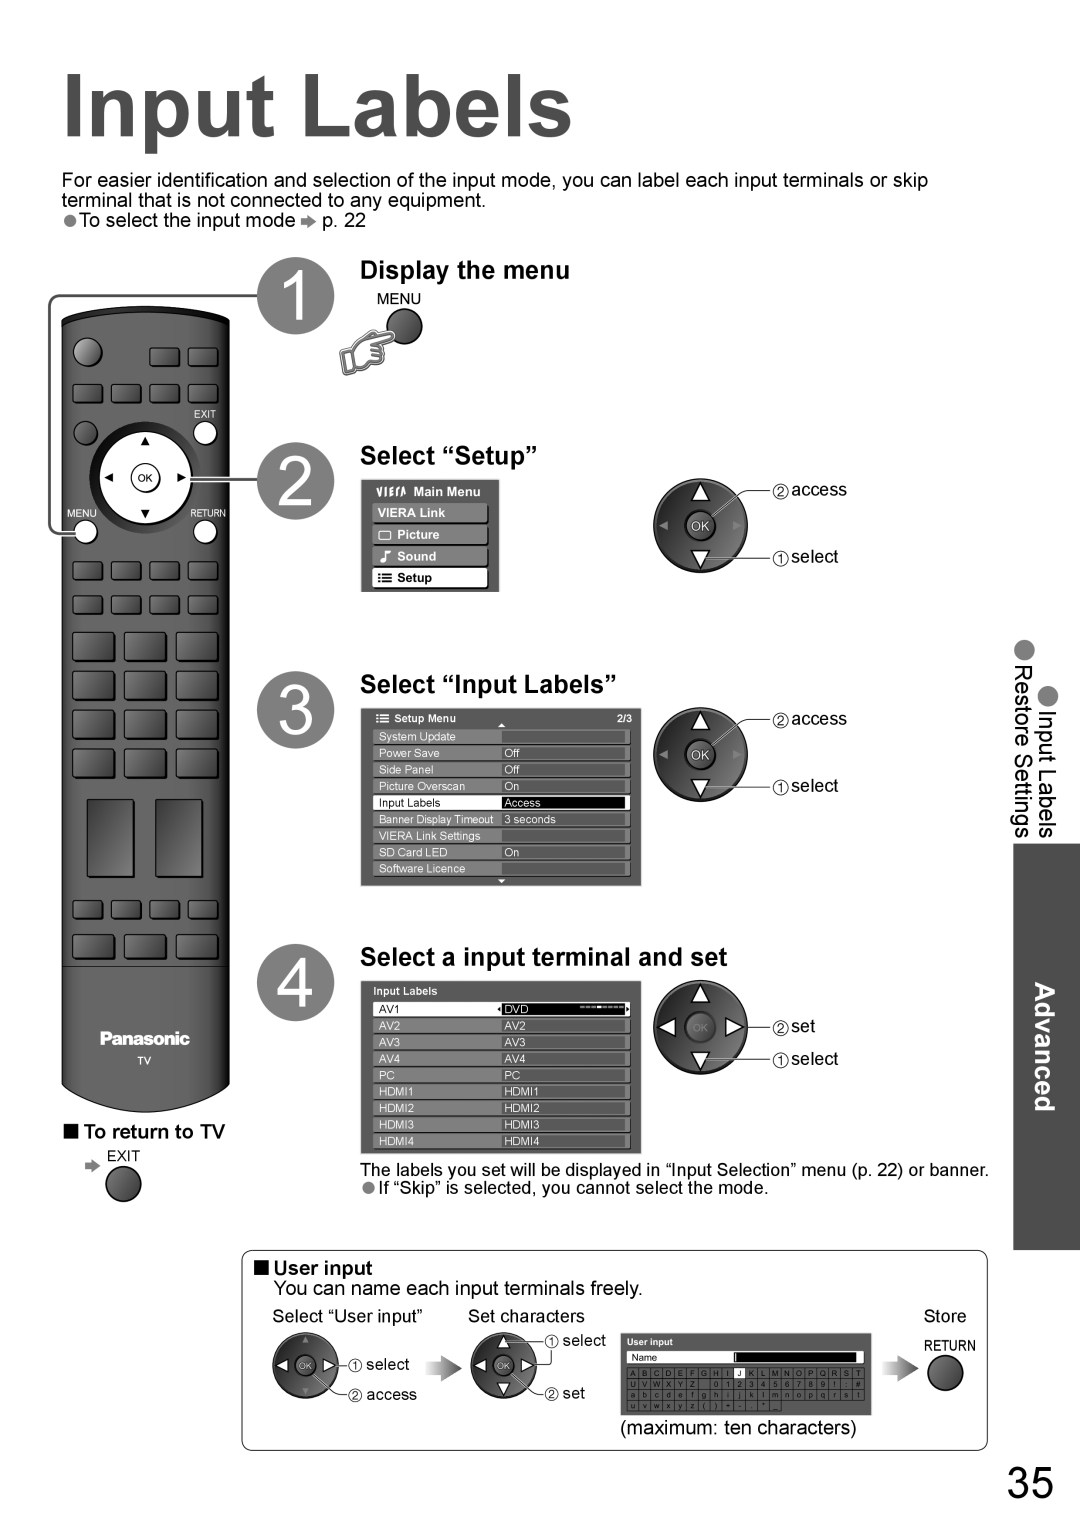 Panasonic TH-42PZ850AZ Input Labels, Display the menu Select “Setup”, To select the input mode p, To return to TV, access 